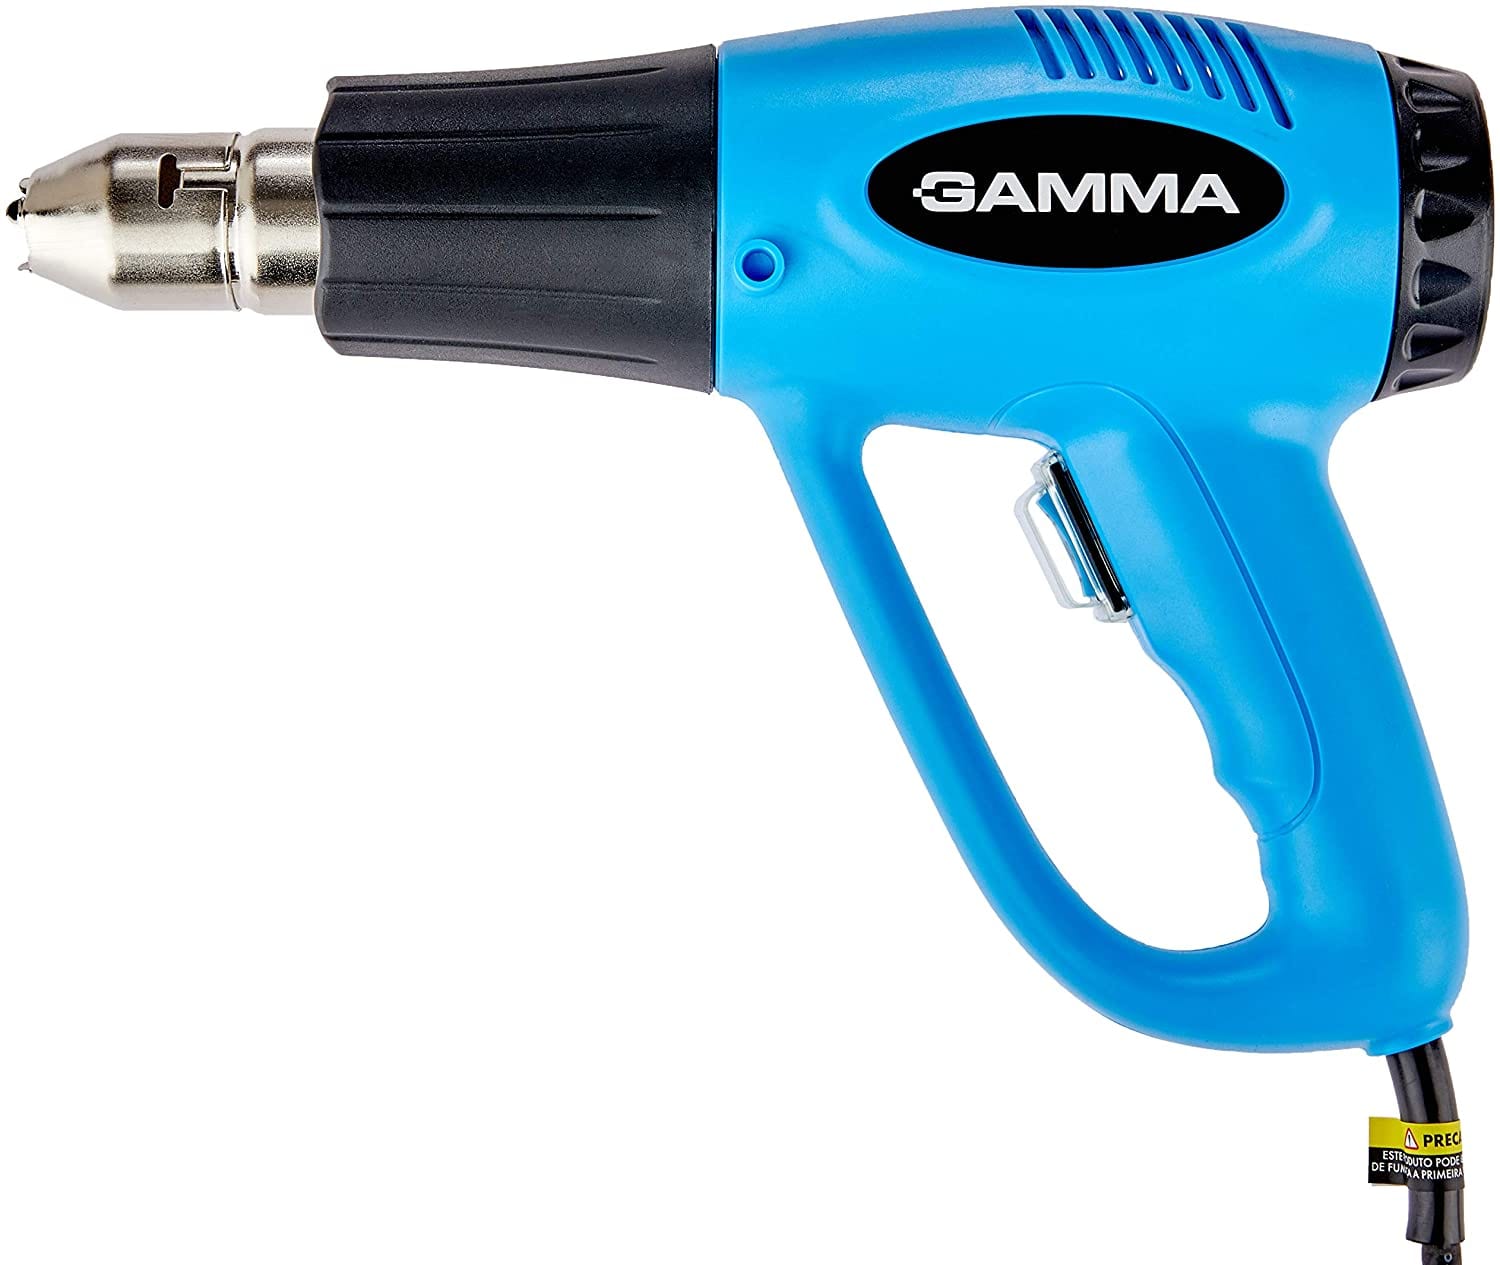 Soprador Térmico com Kit, Gamma Ferramentas G1935K/BR1, Azul